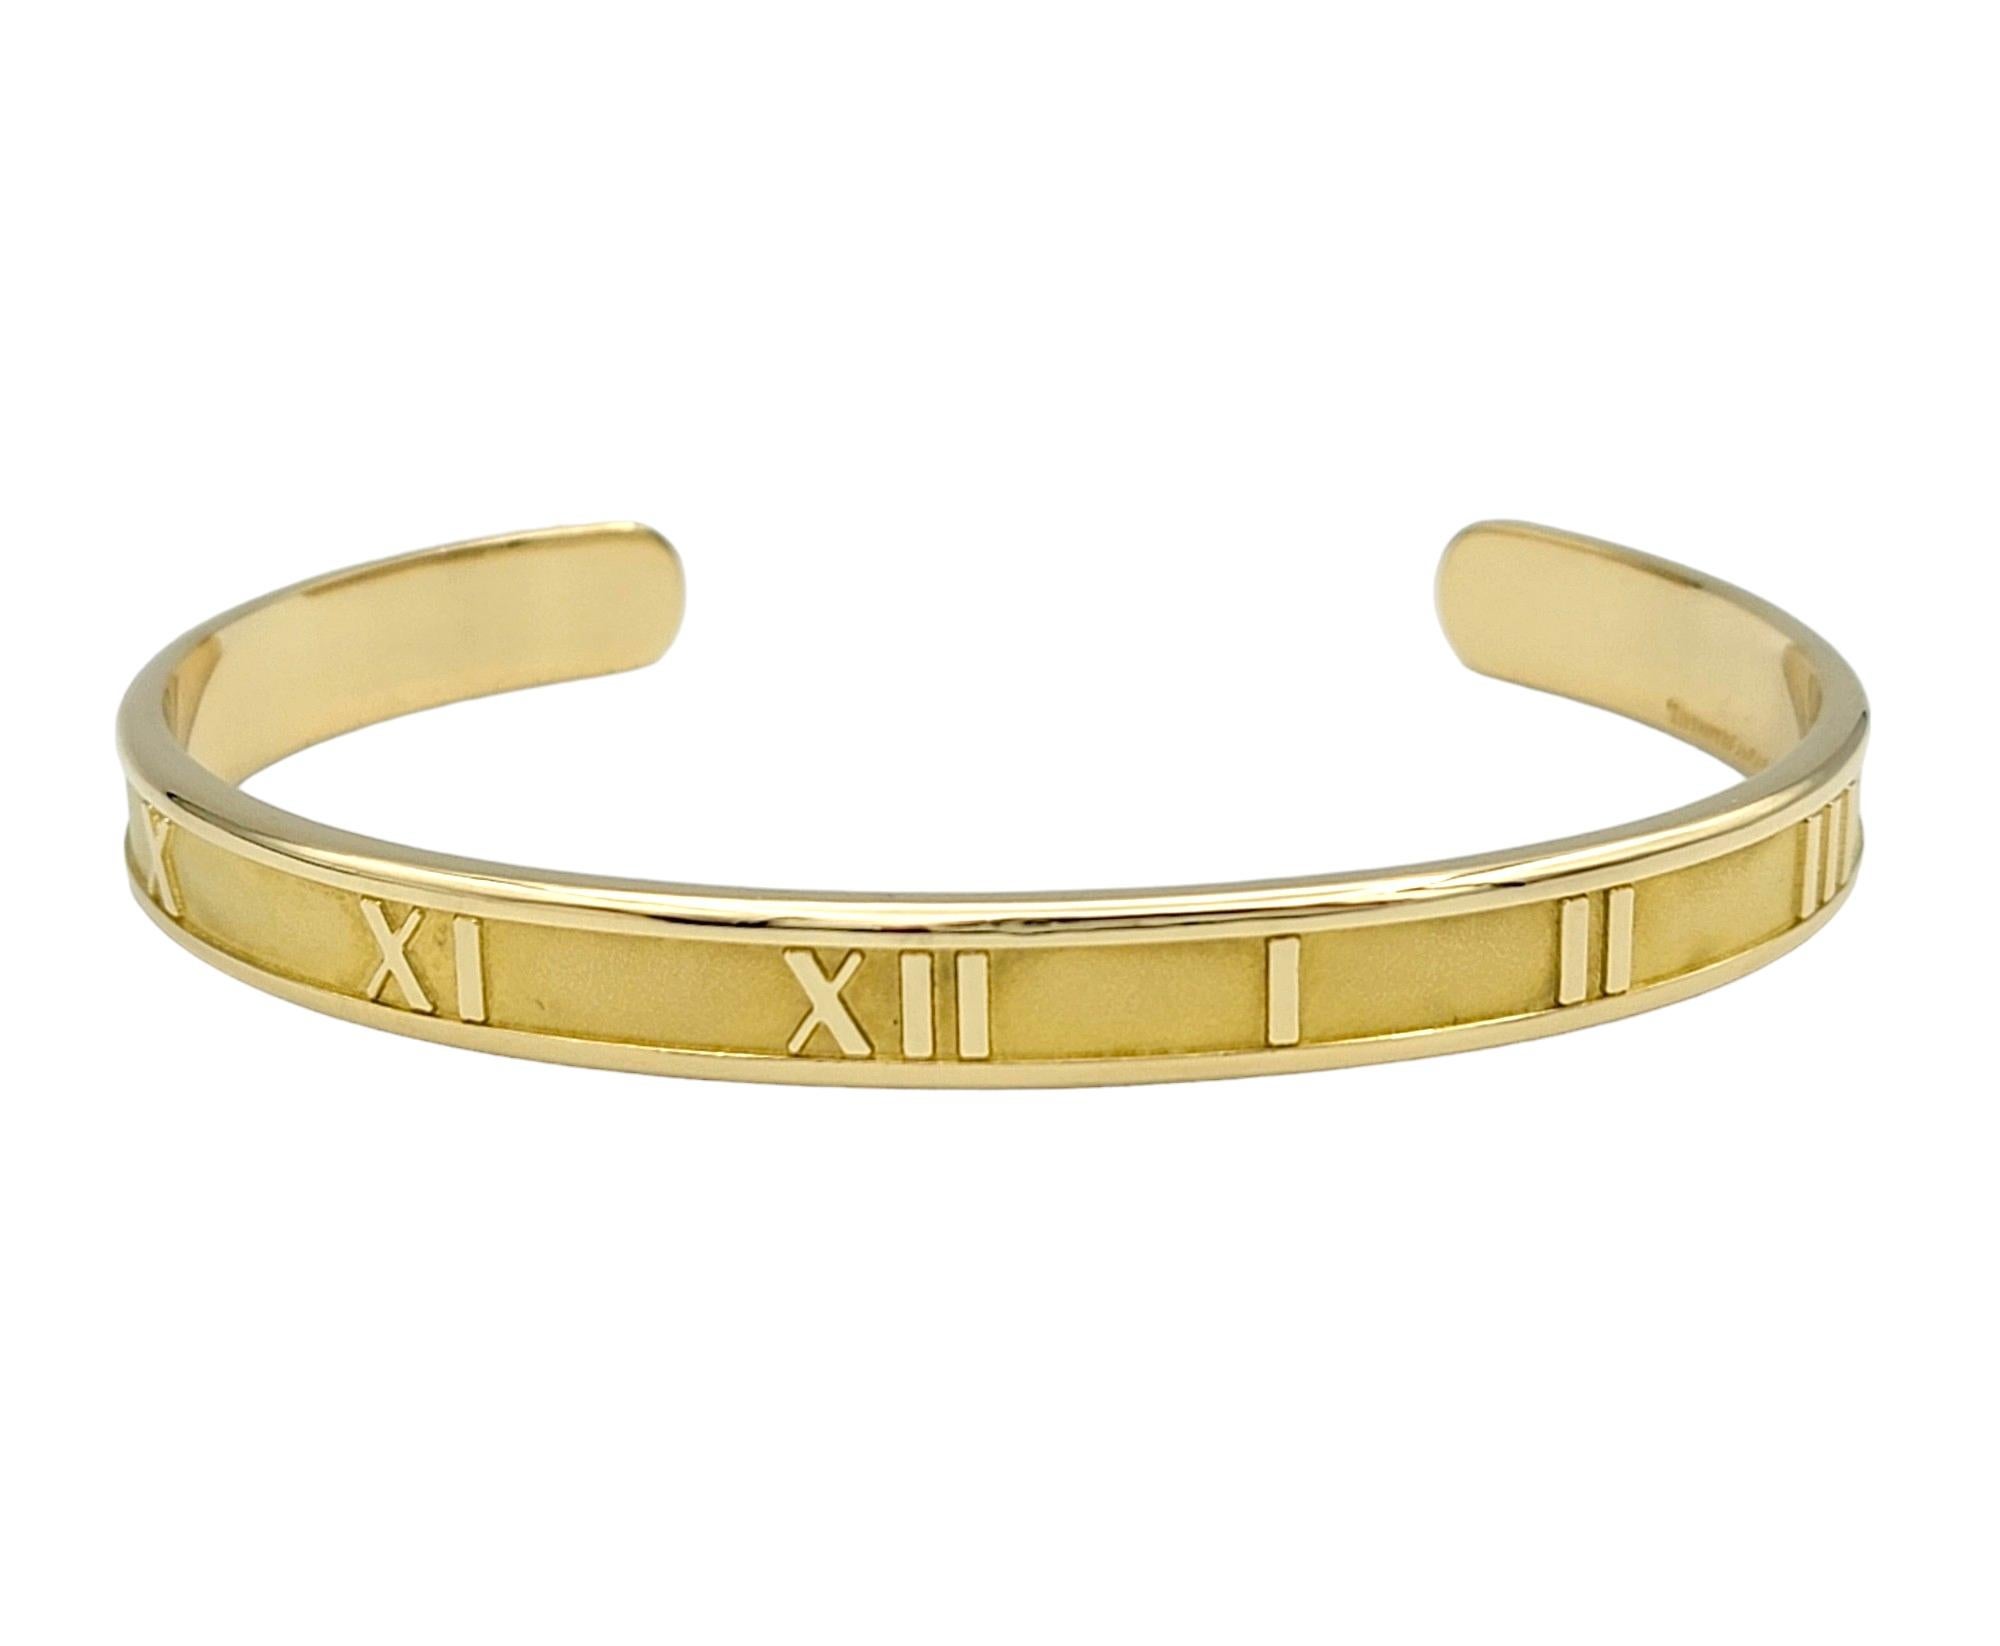 Tiffany & Co. Atlas Cuff Bracelet Set in 18 Karat Yellow Gold In Excellent Condition For Sale In Scottsdale, AZ